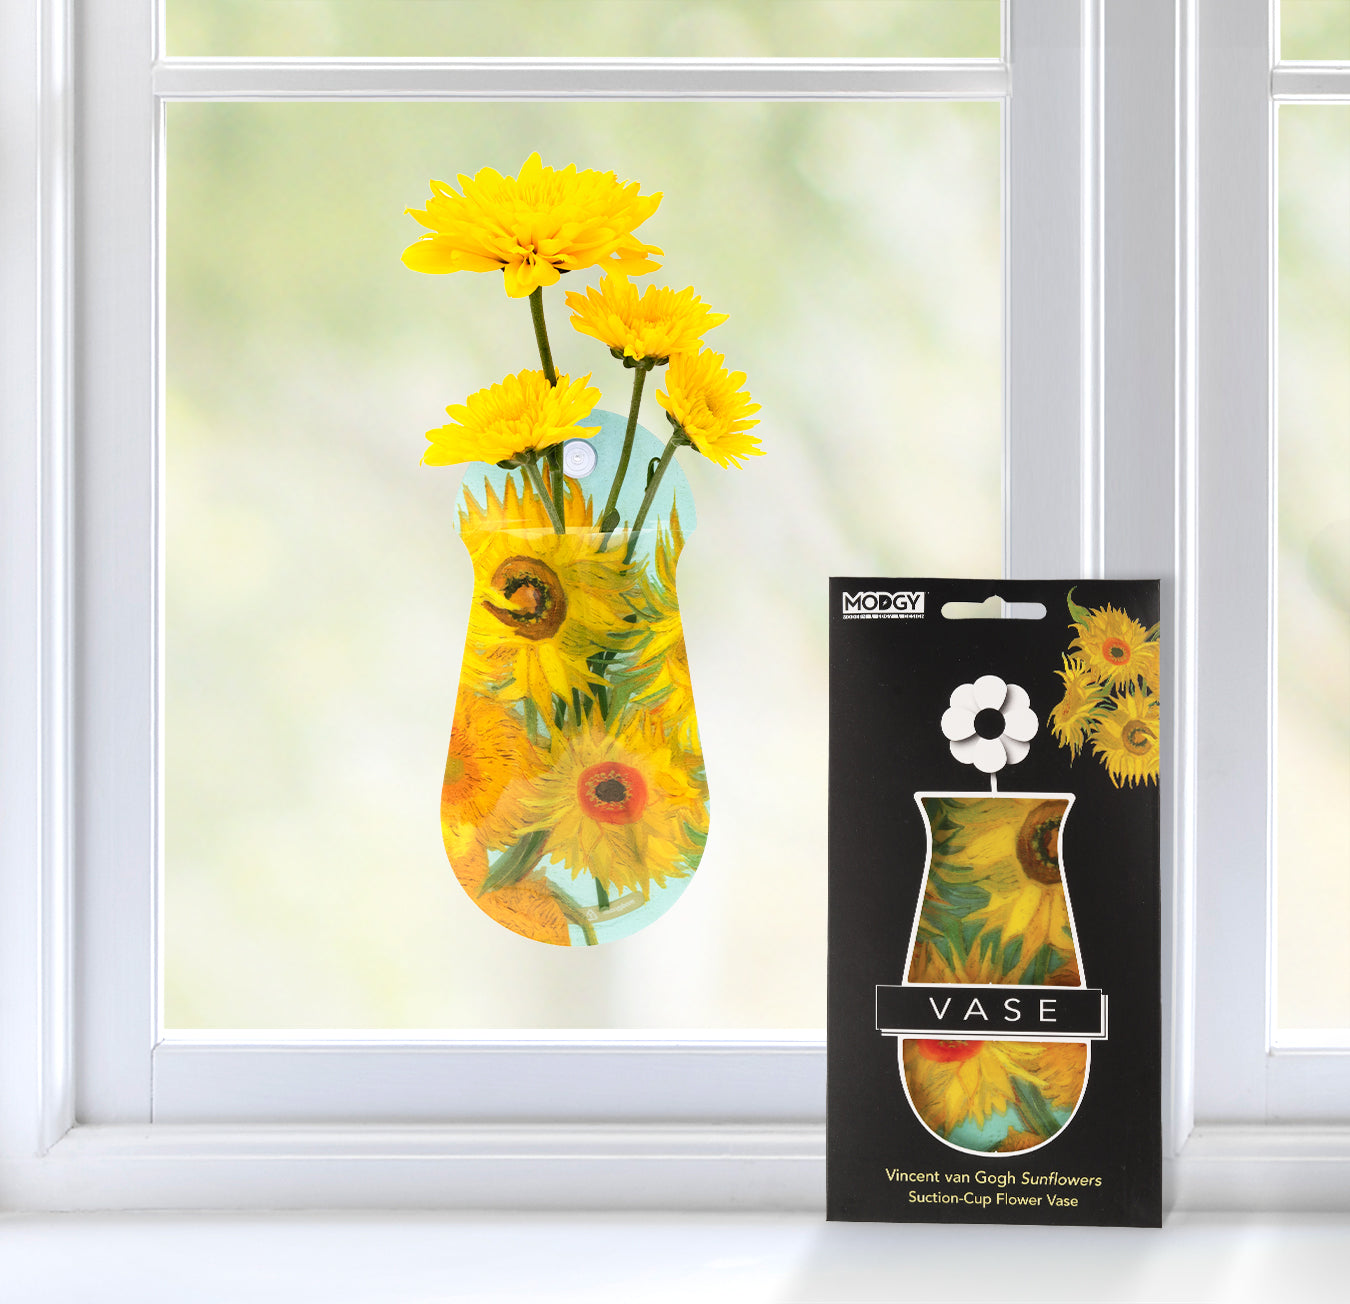 Van Gogh Sunflowers Suction Cup Vase